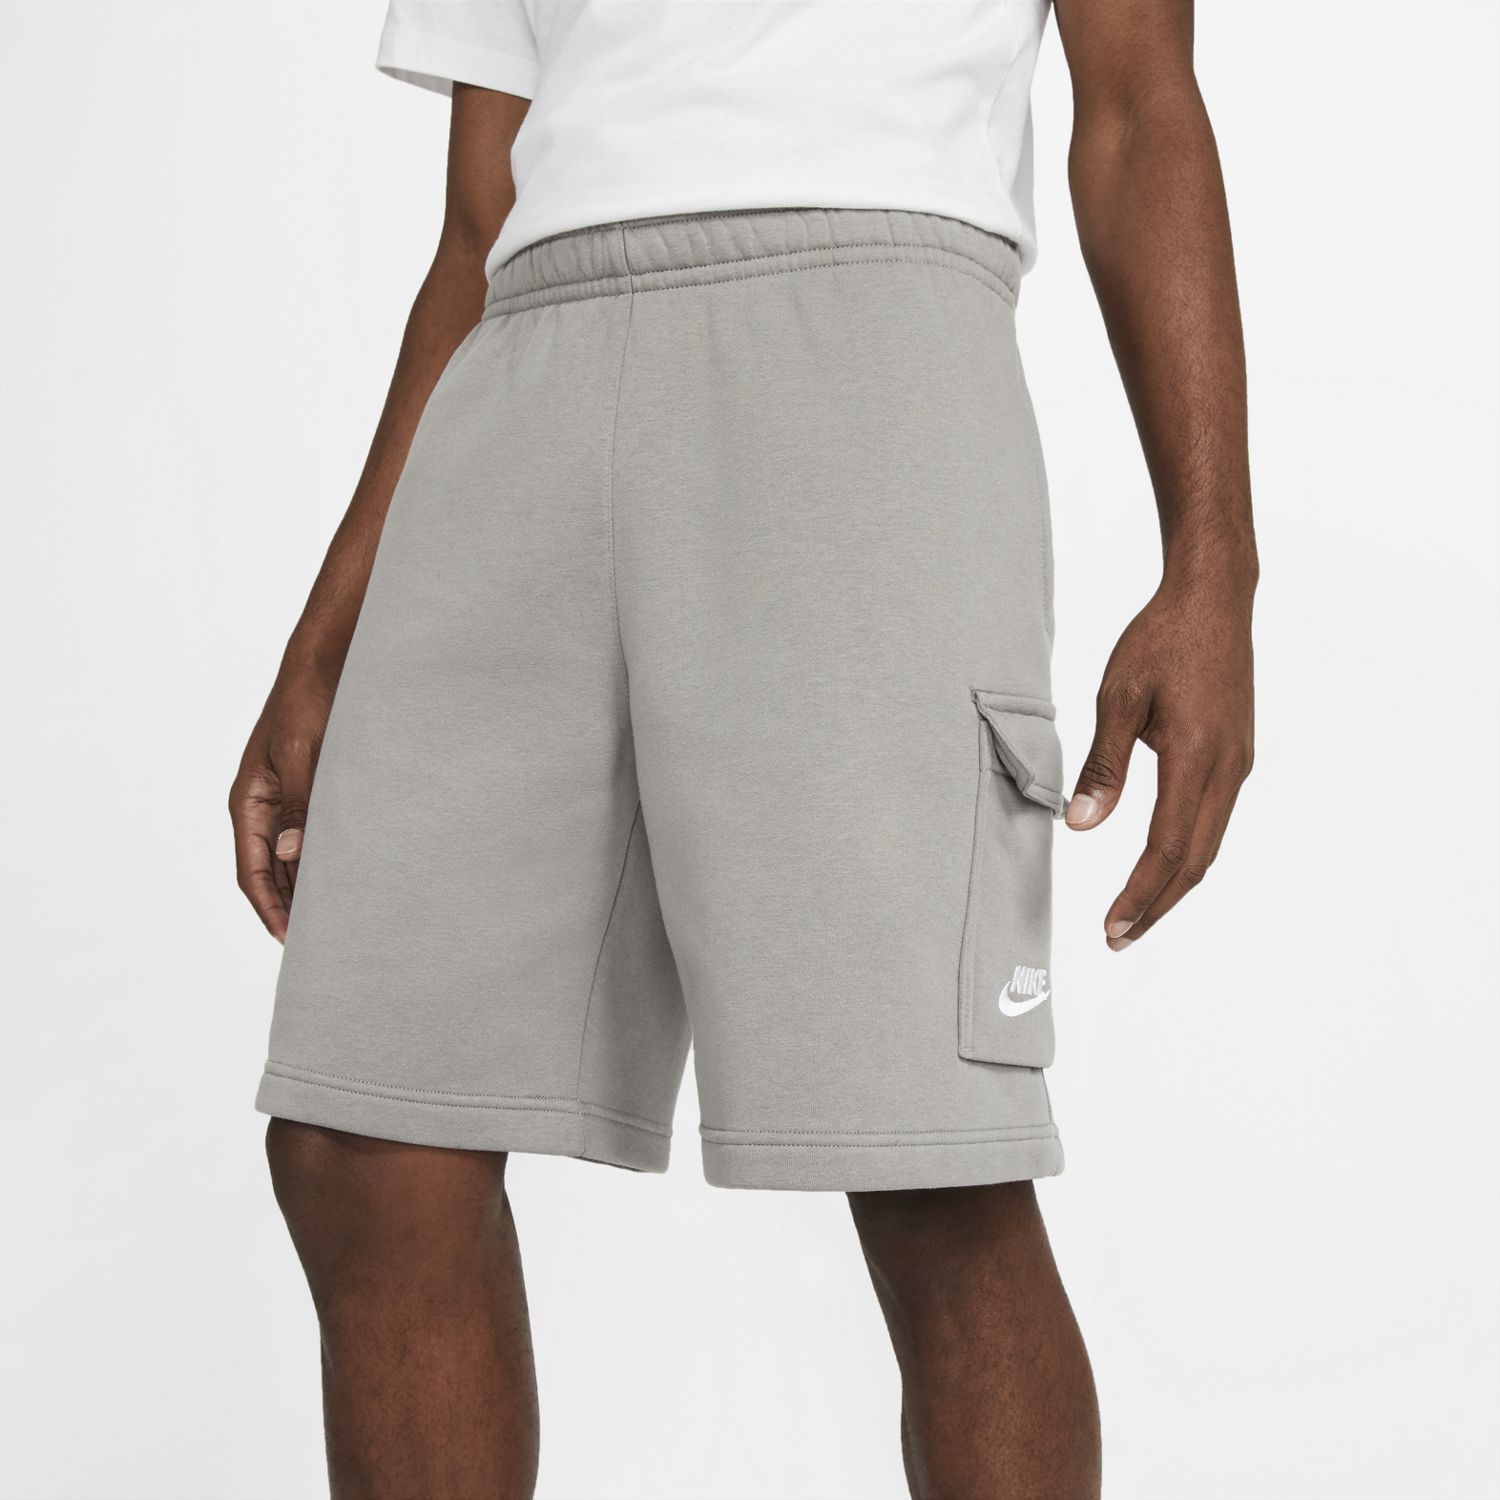 Men's Nike Shorts: Nike Sweat Shorts 